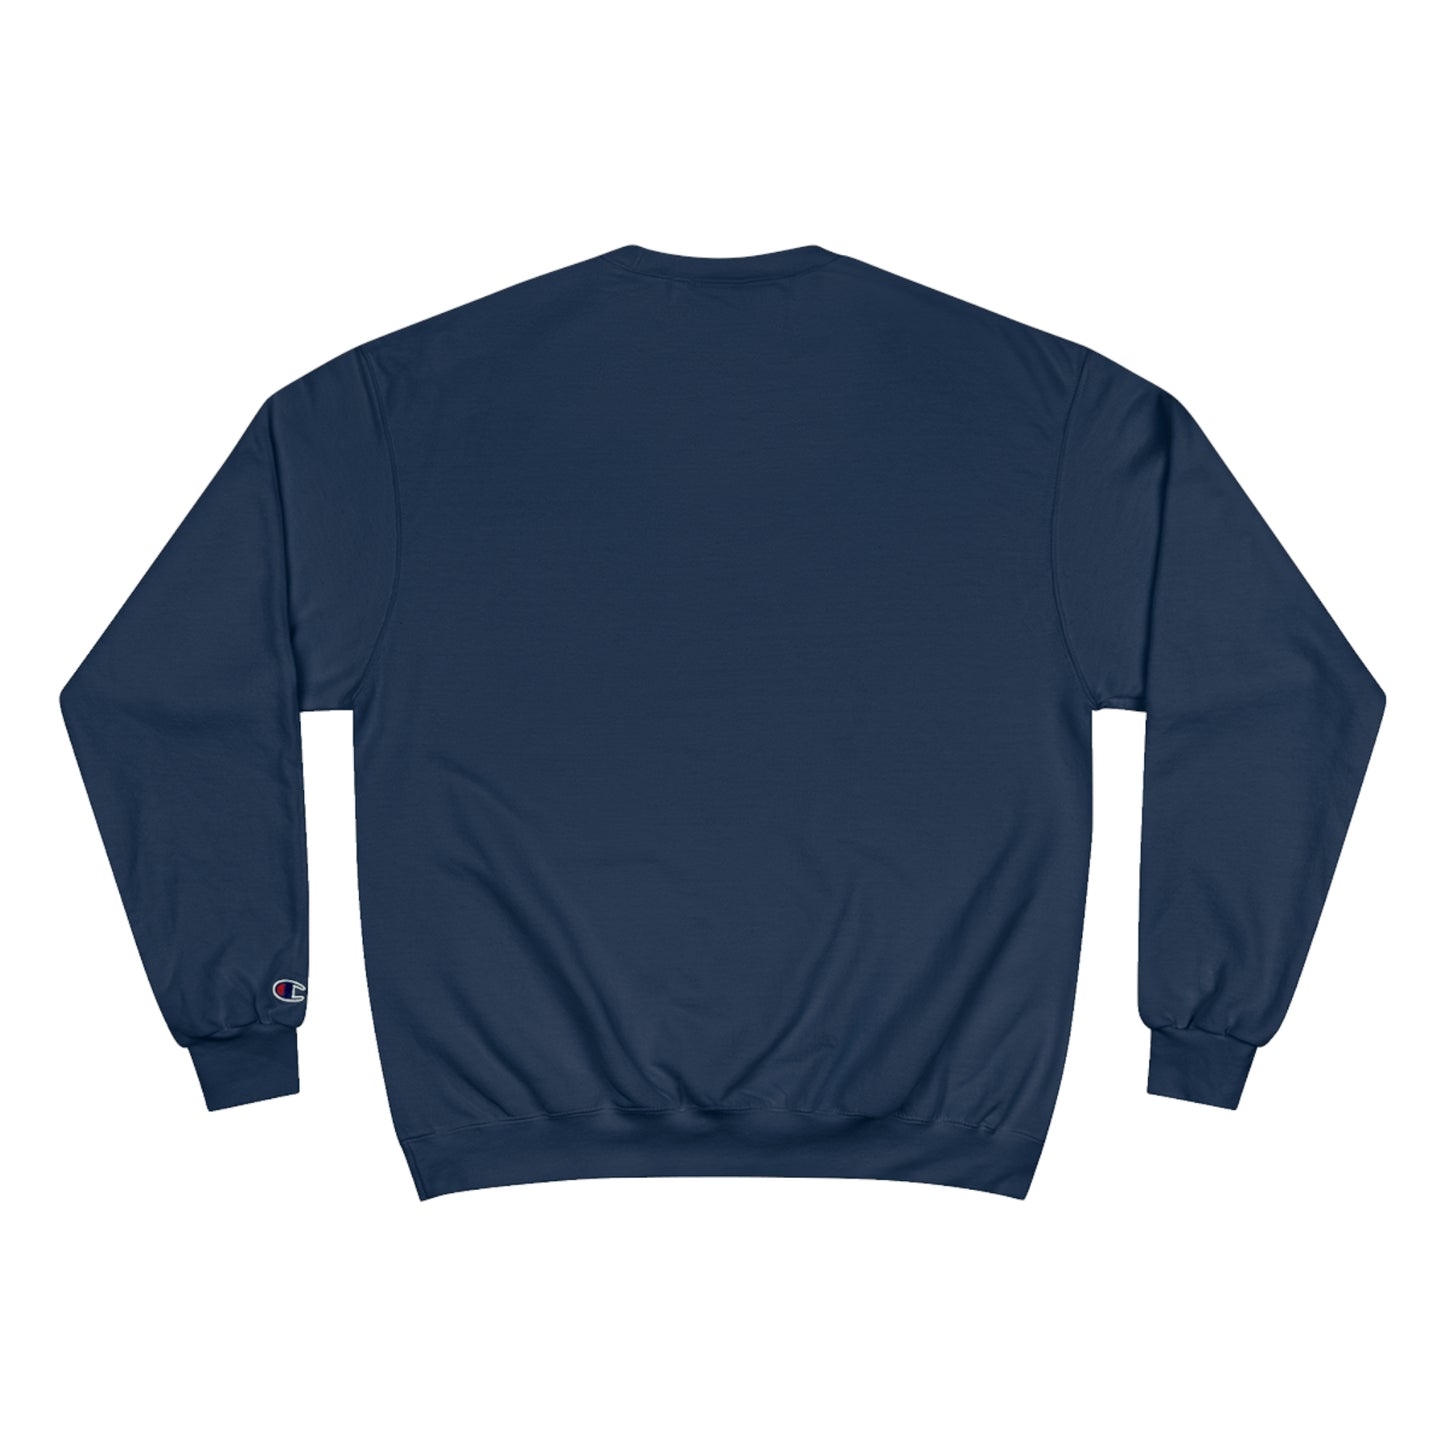 Cross Country Cutout - Champion Sweatshirt